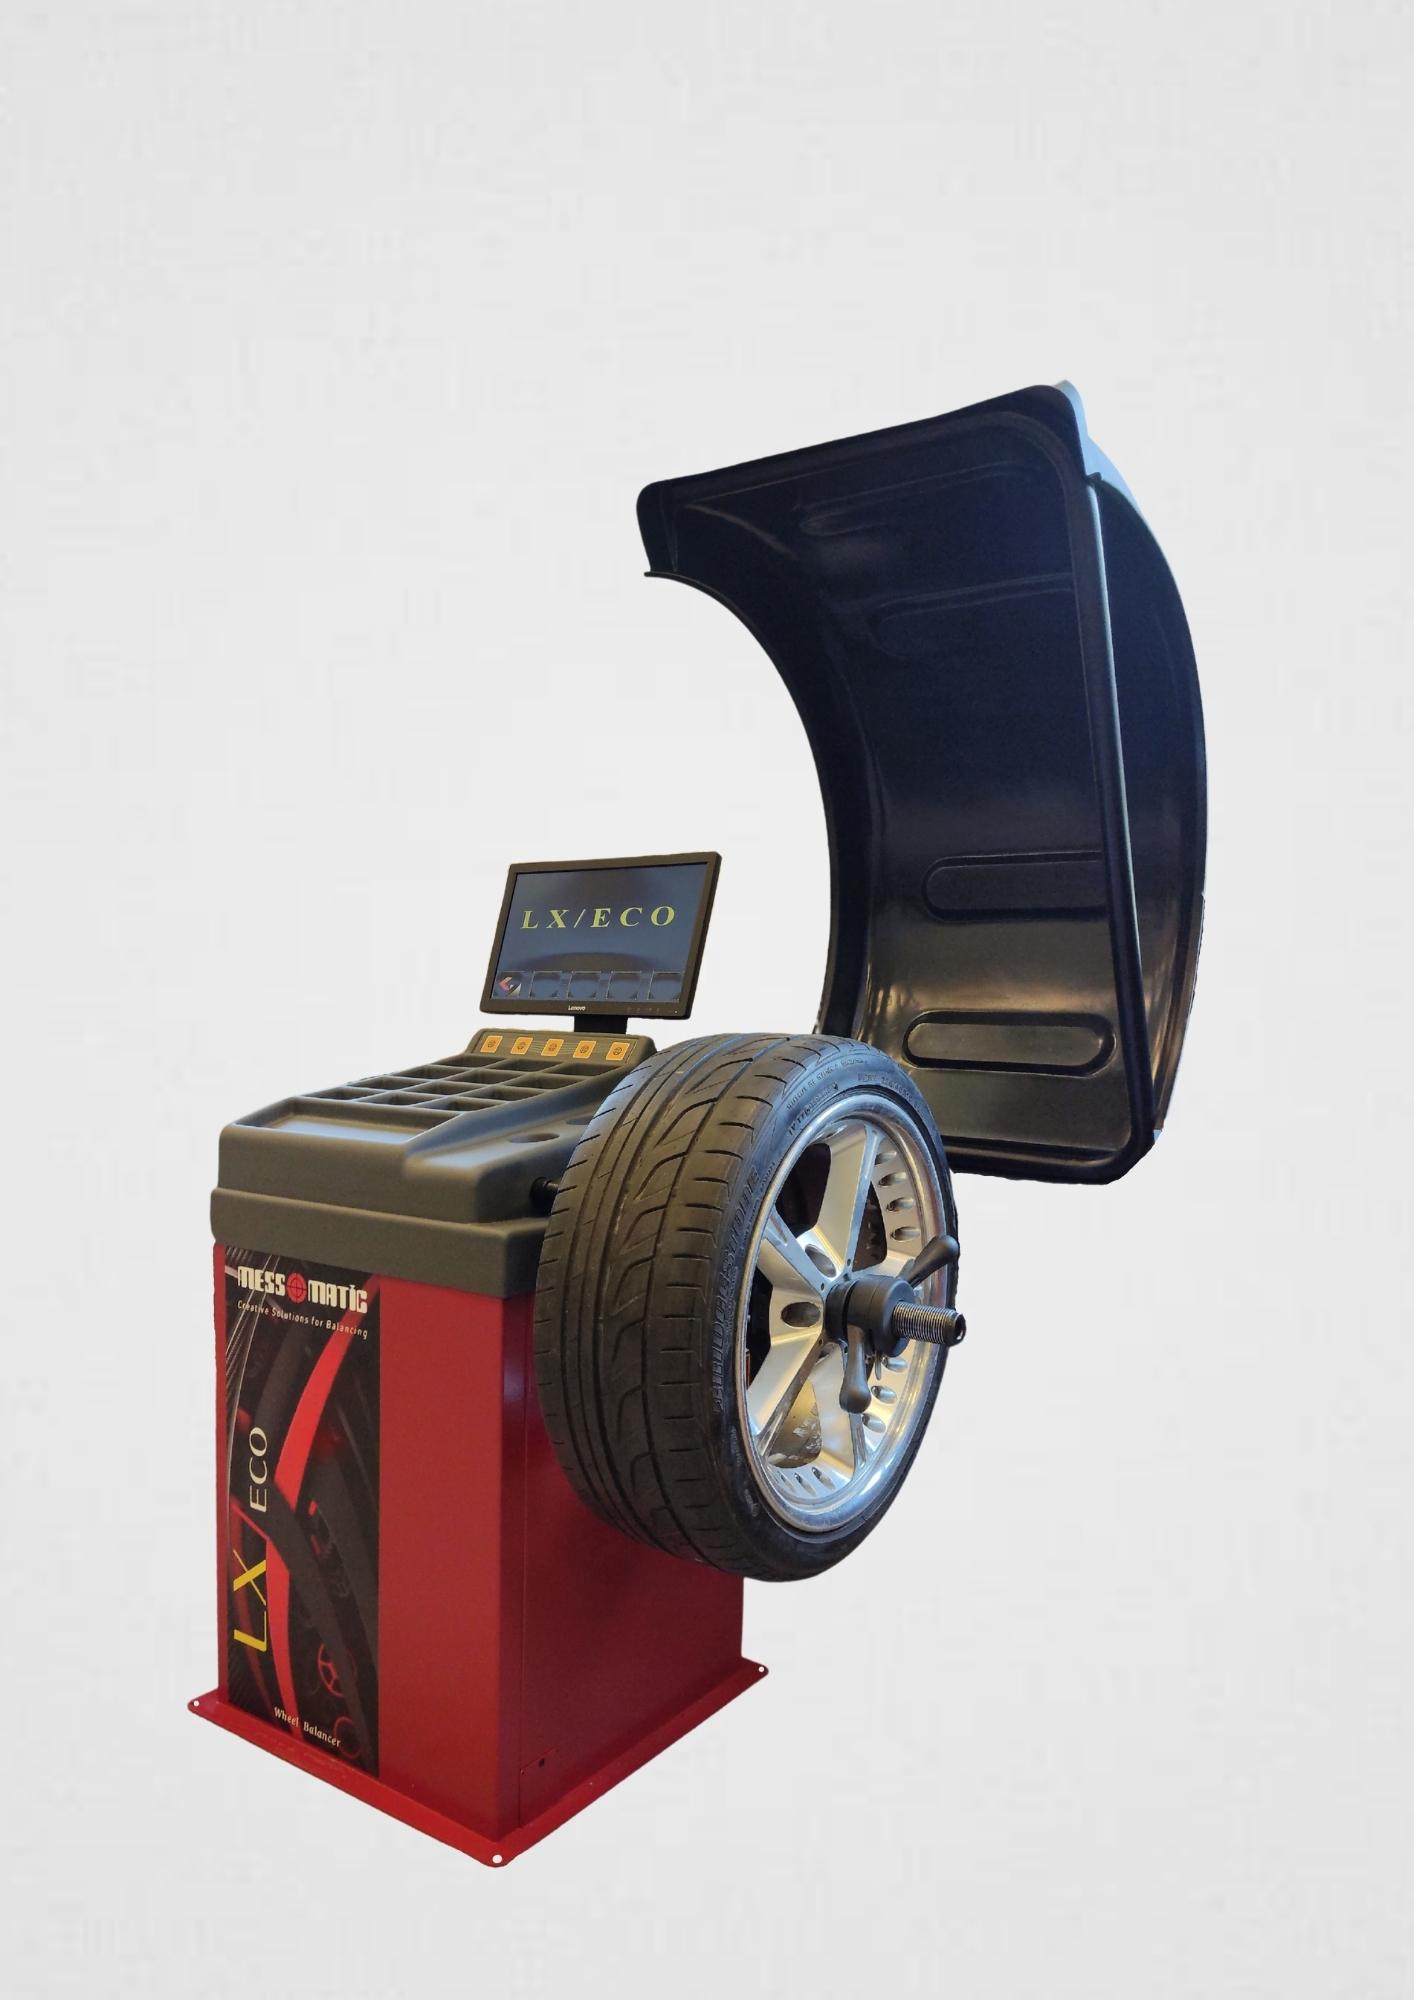 LX Eco - Lastik Balans Makinası